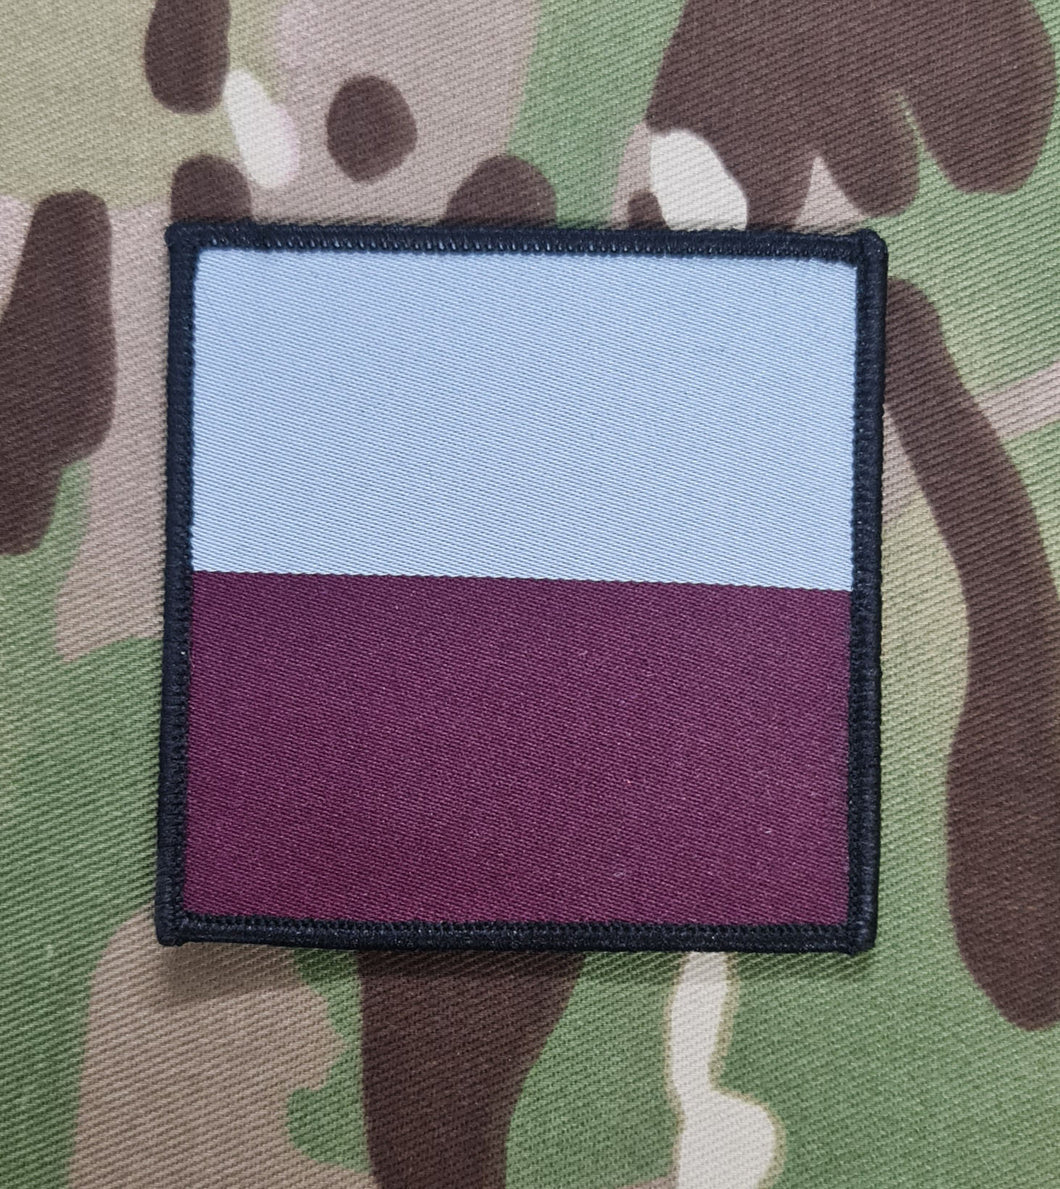 Parachute Training (Para) Depot DZ Drop Zone Patch / Badge